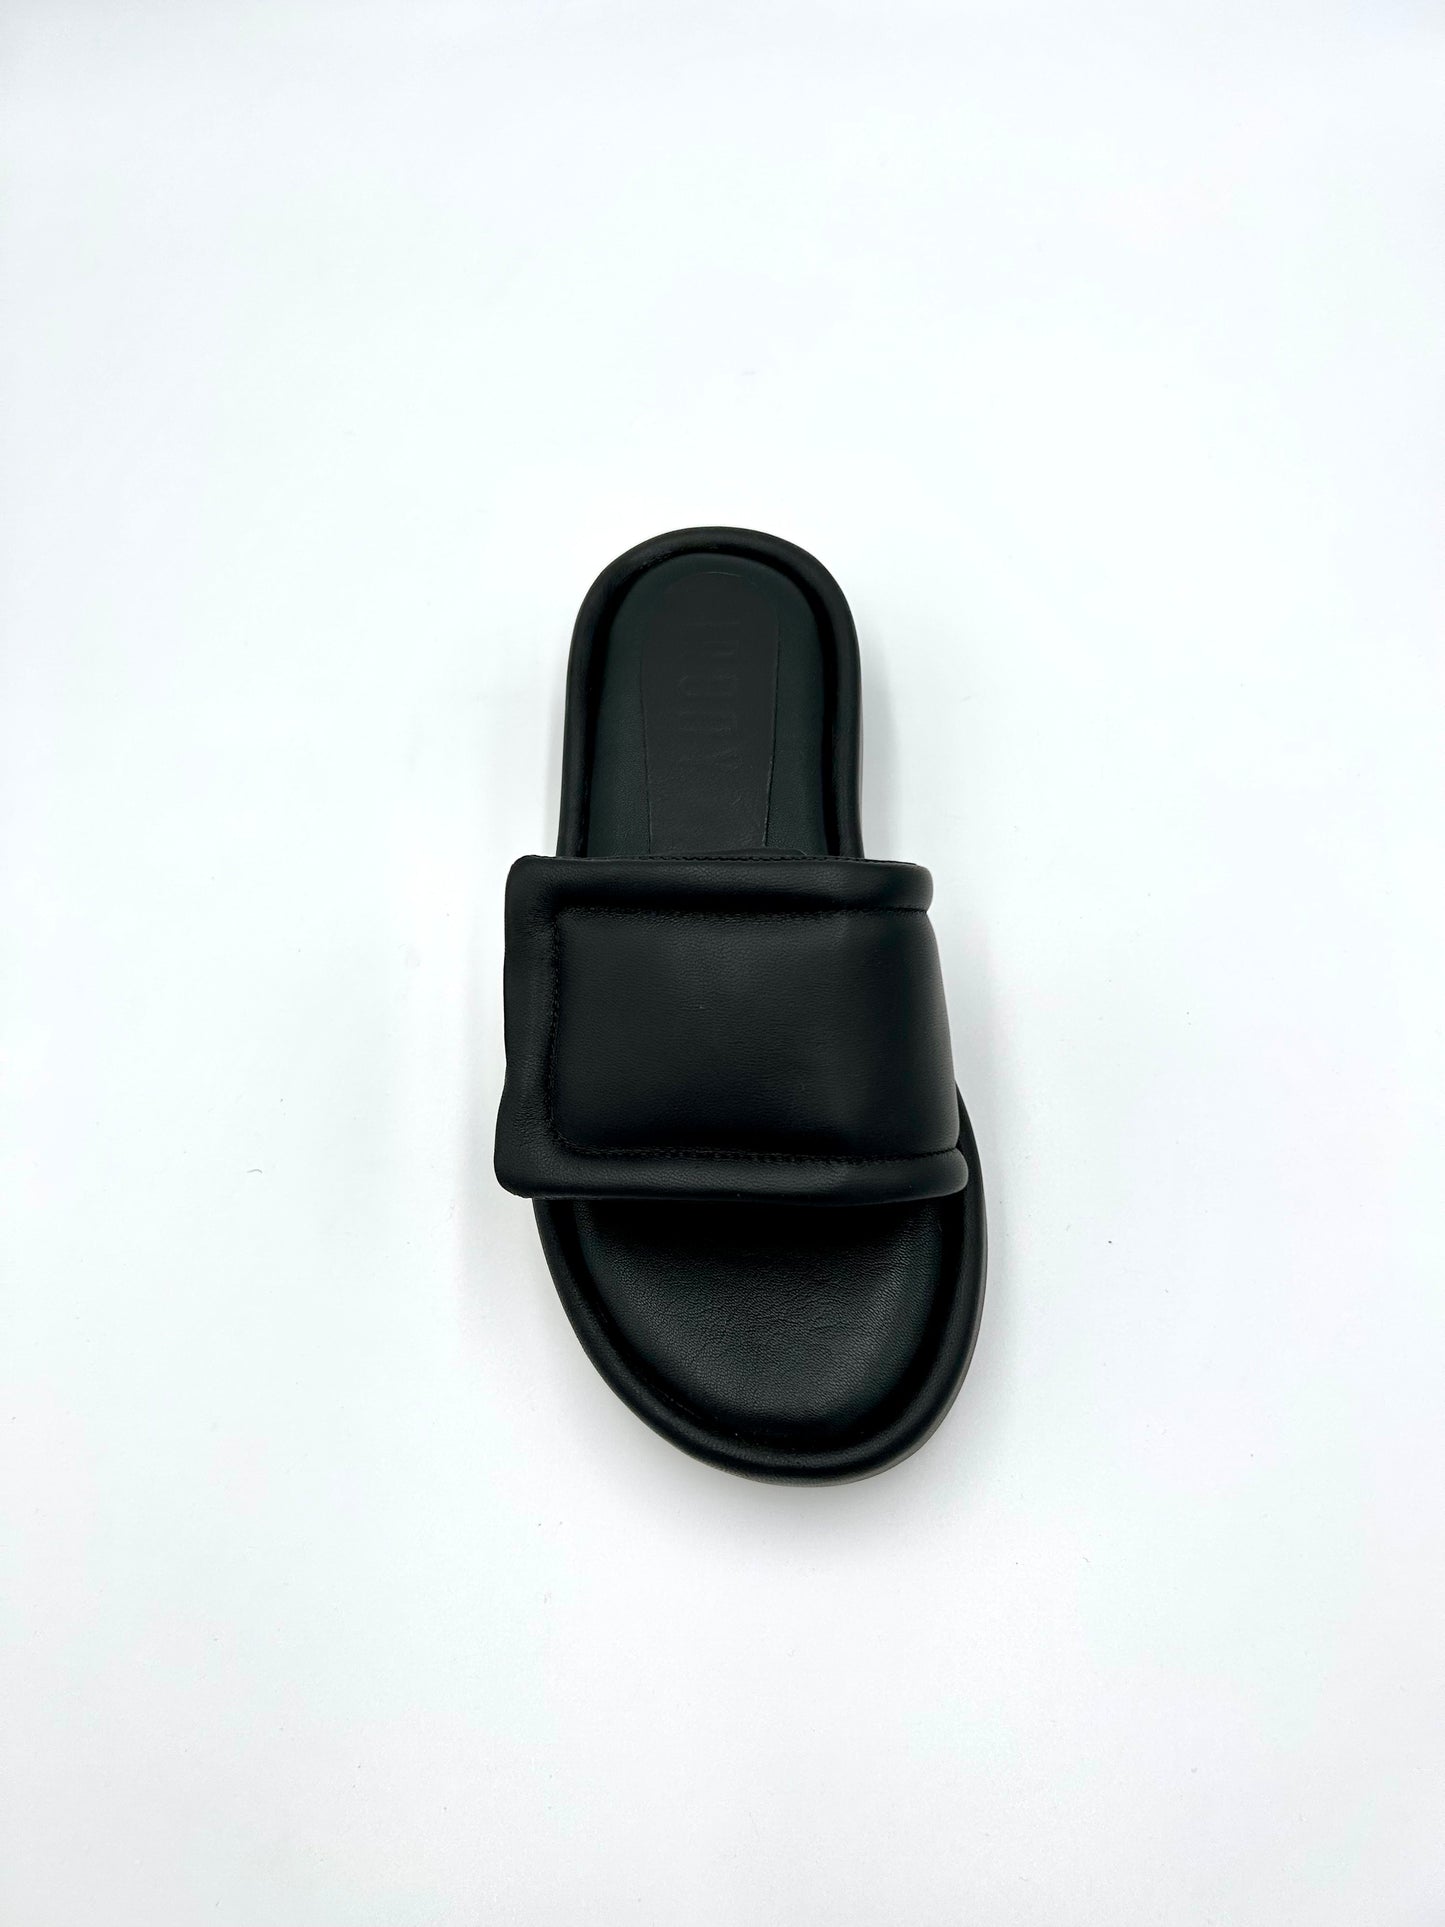 Made in italy Sandalo regolabile a fascia - in pelle nero ( fondo Vibram) - Made in Italy